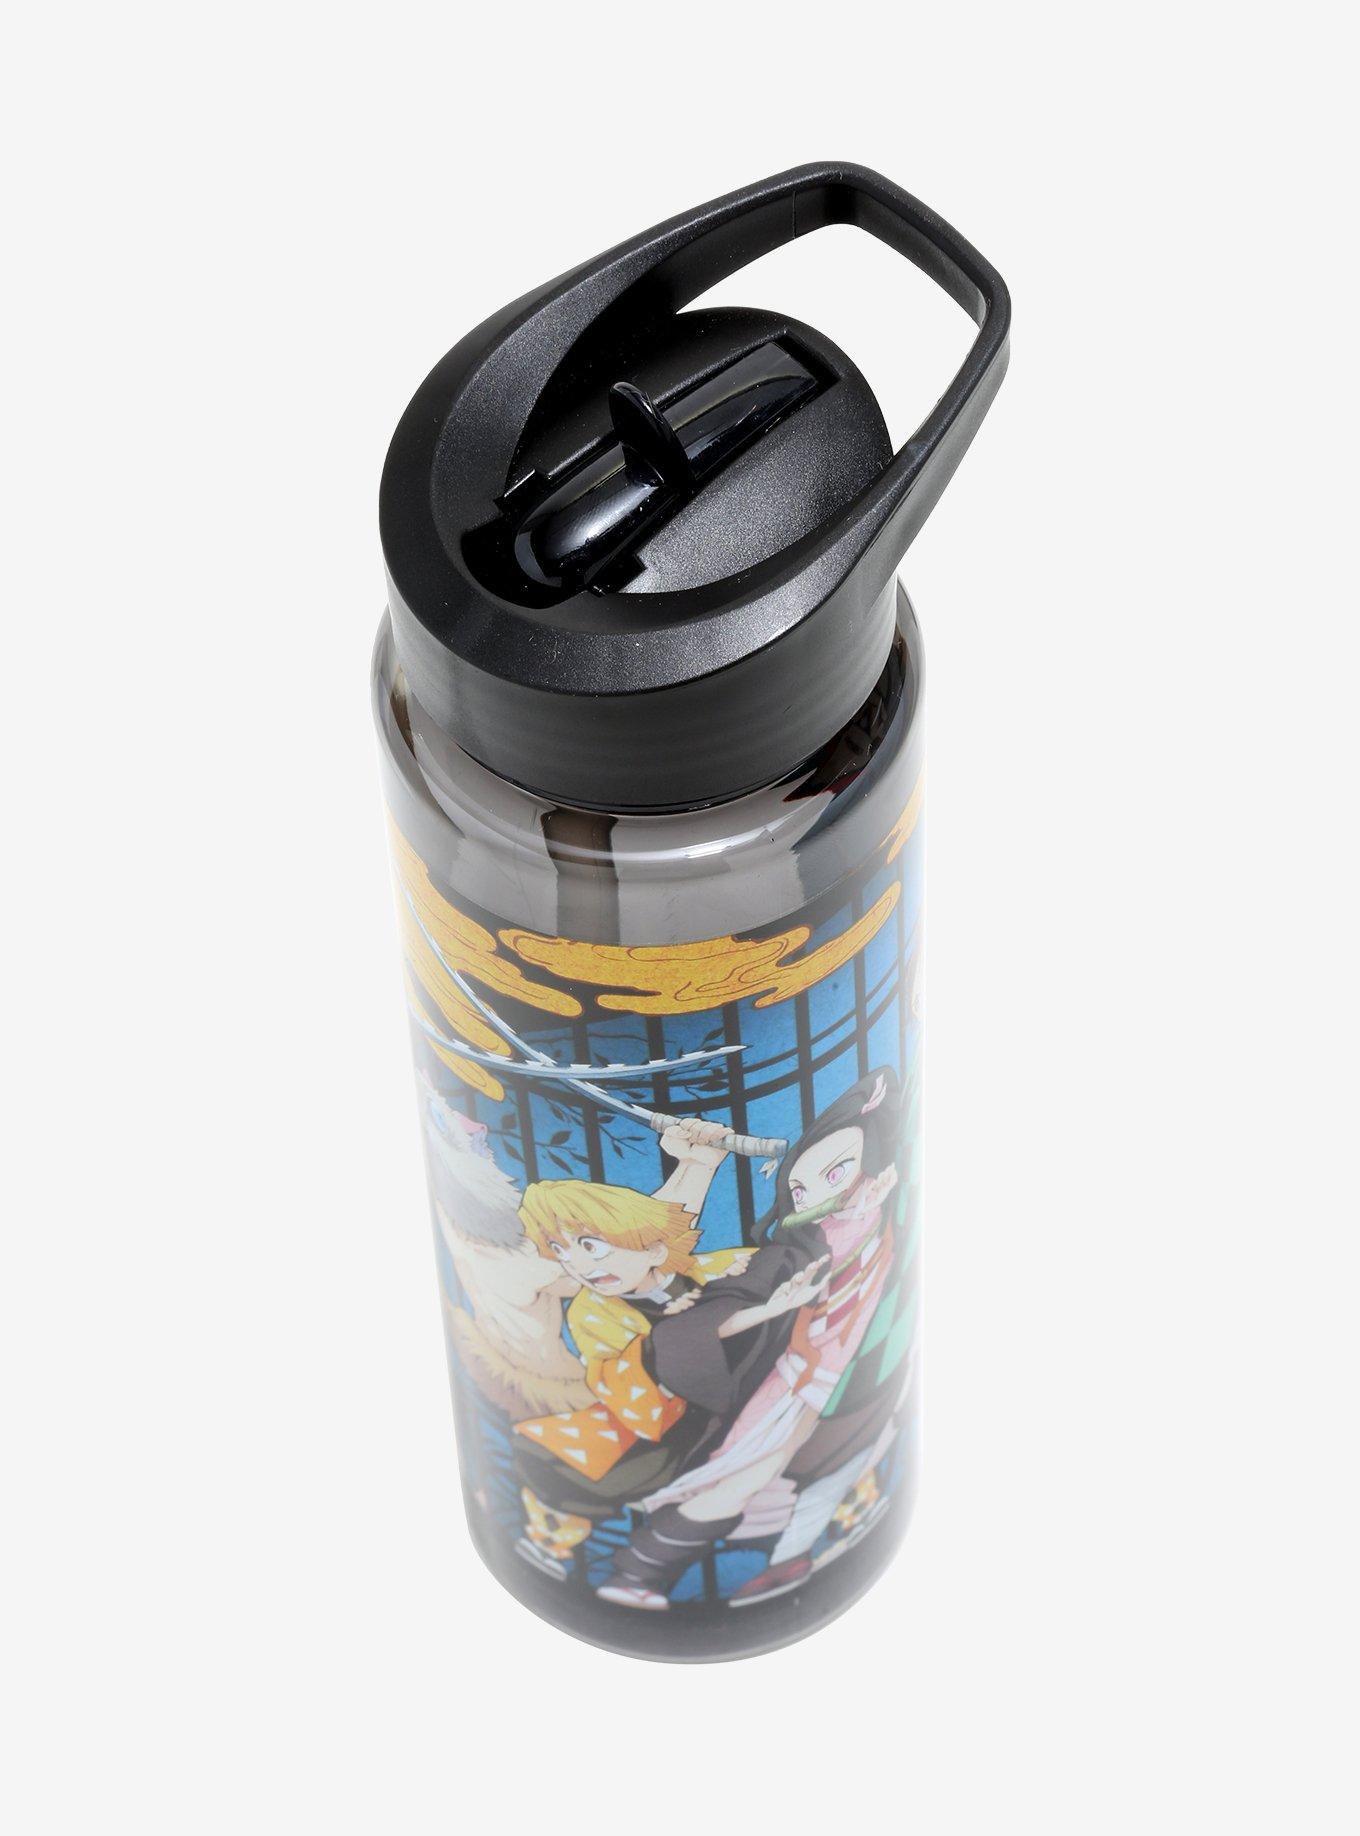 Demon Slayer: Kimetsu No Yaiba Group Water Bottle, , alternate